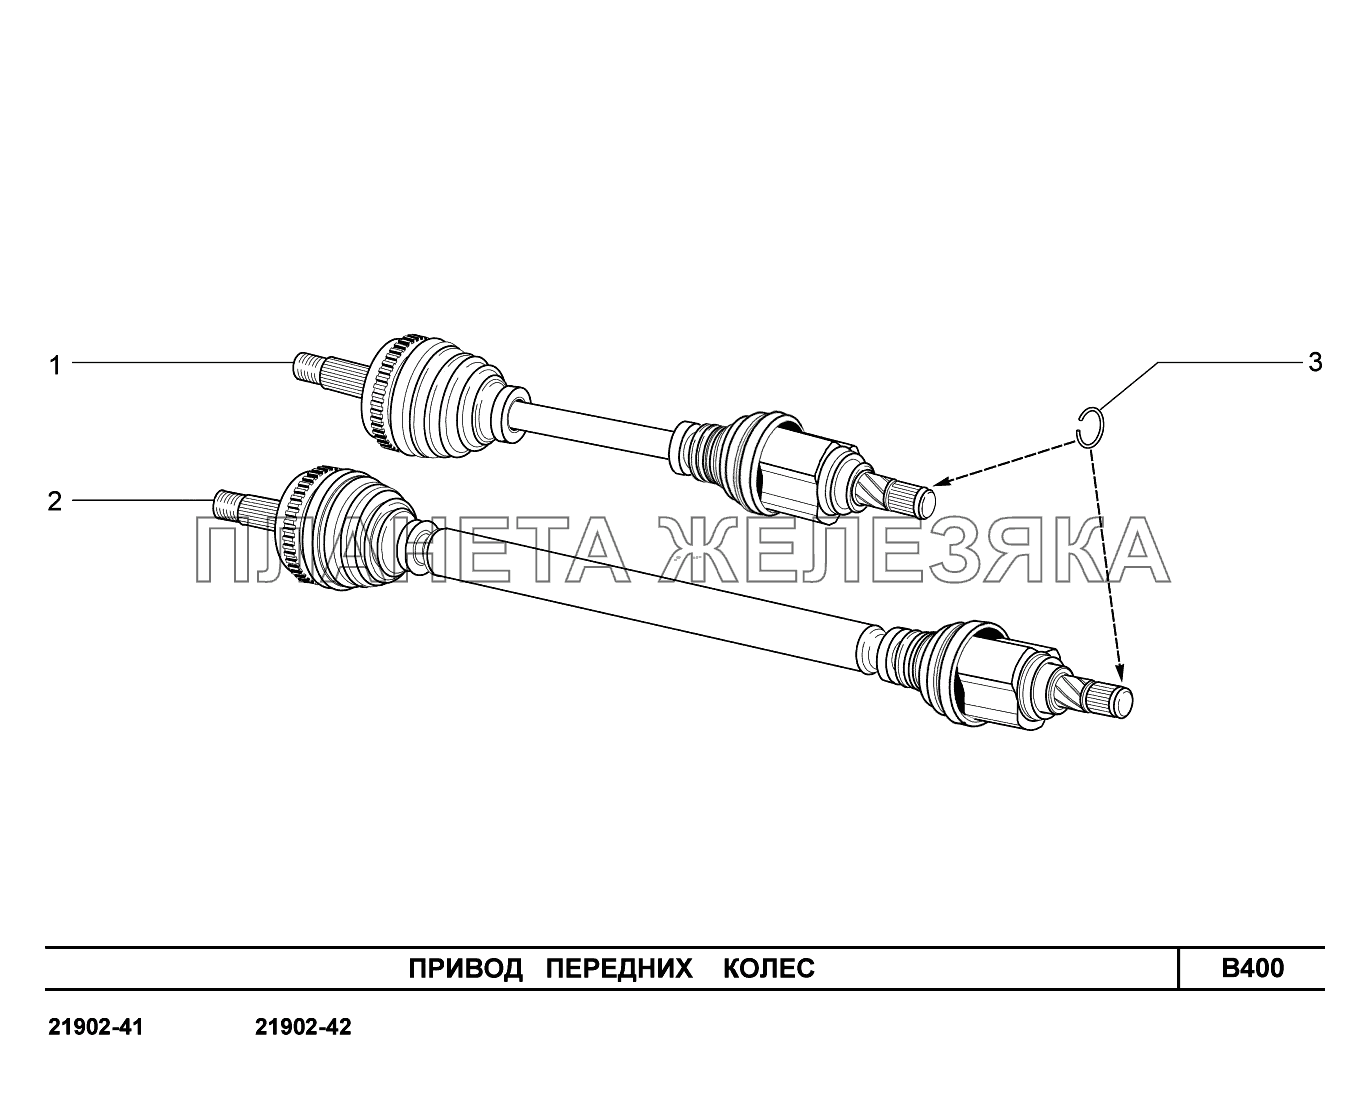 B400. Привод передних колес Lada Granta-2190